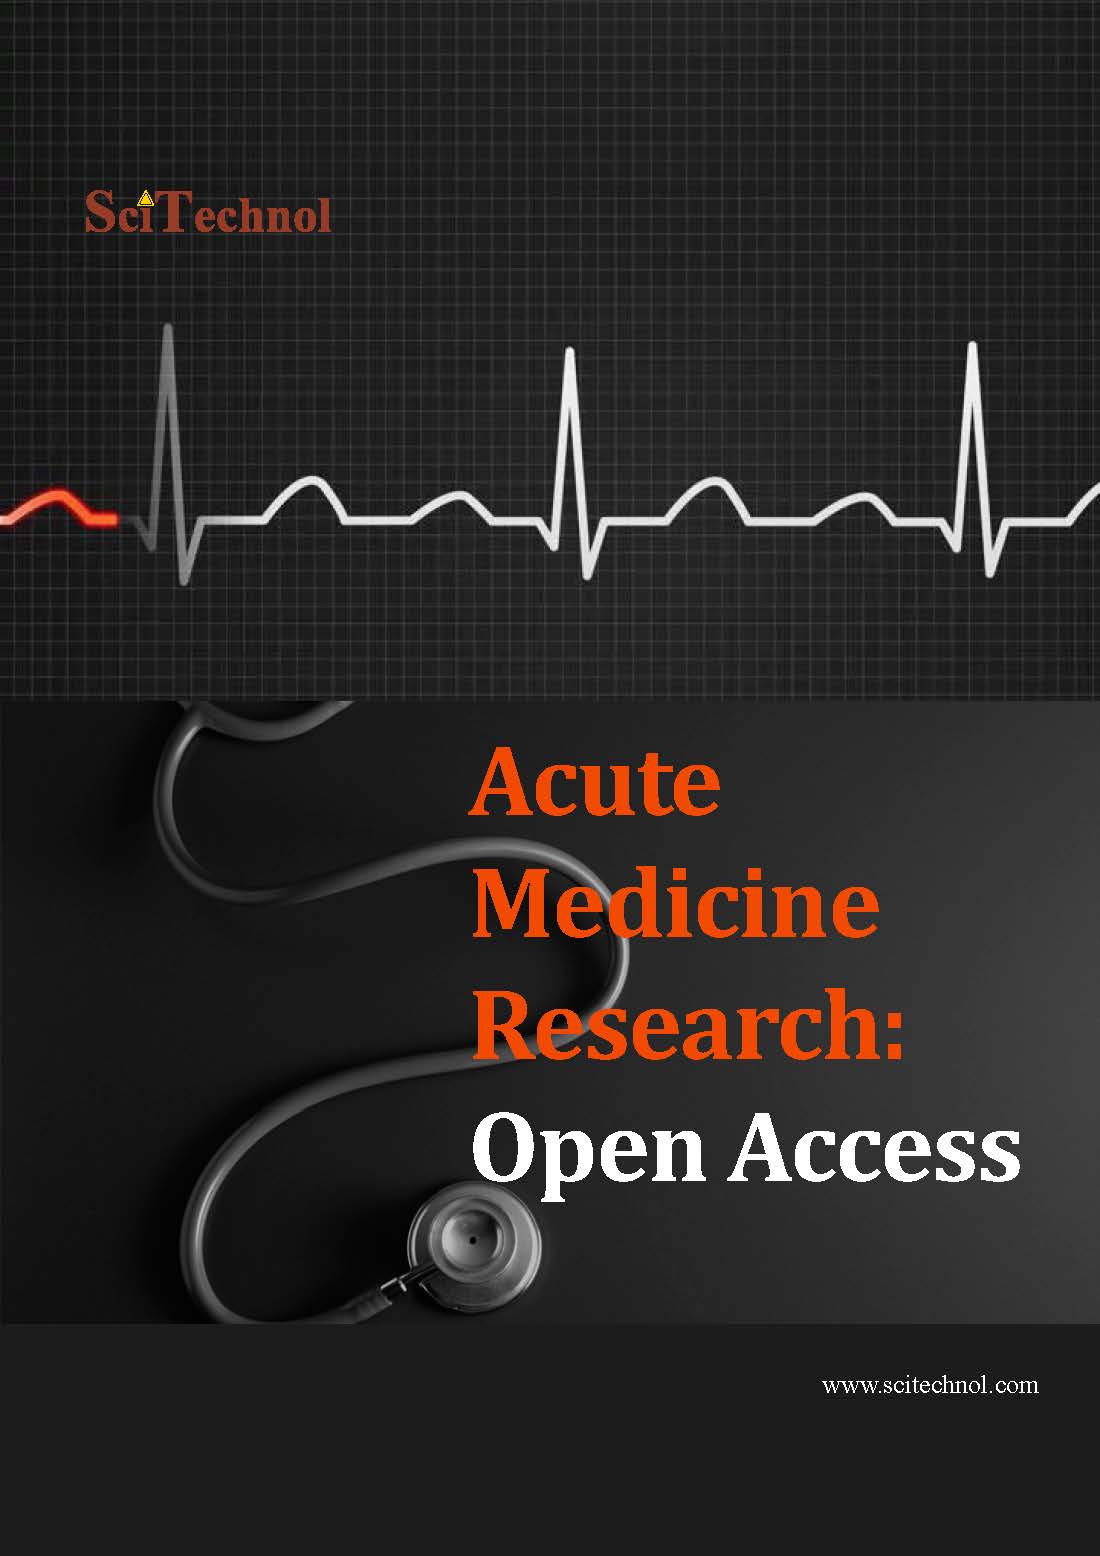 Acute-Medicine-Research-Open-Access-flyer.jpg